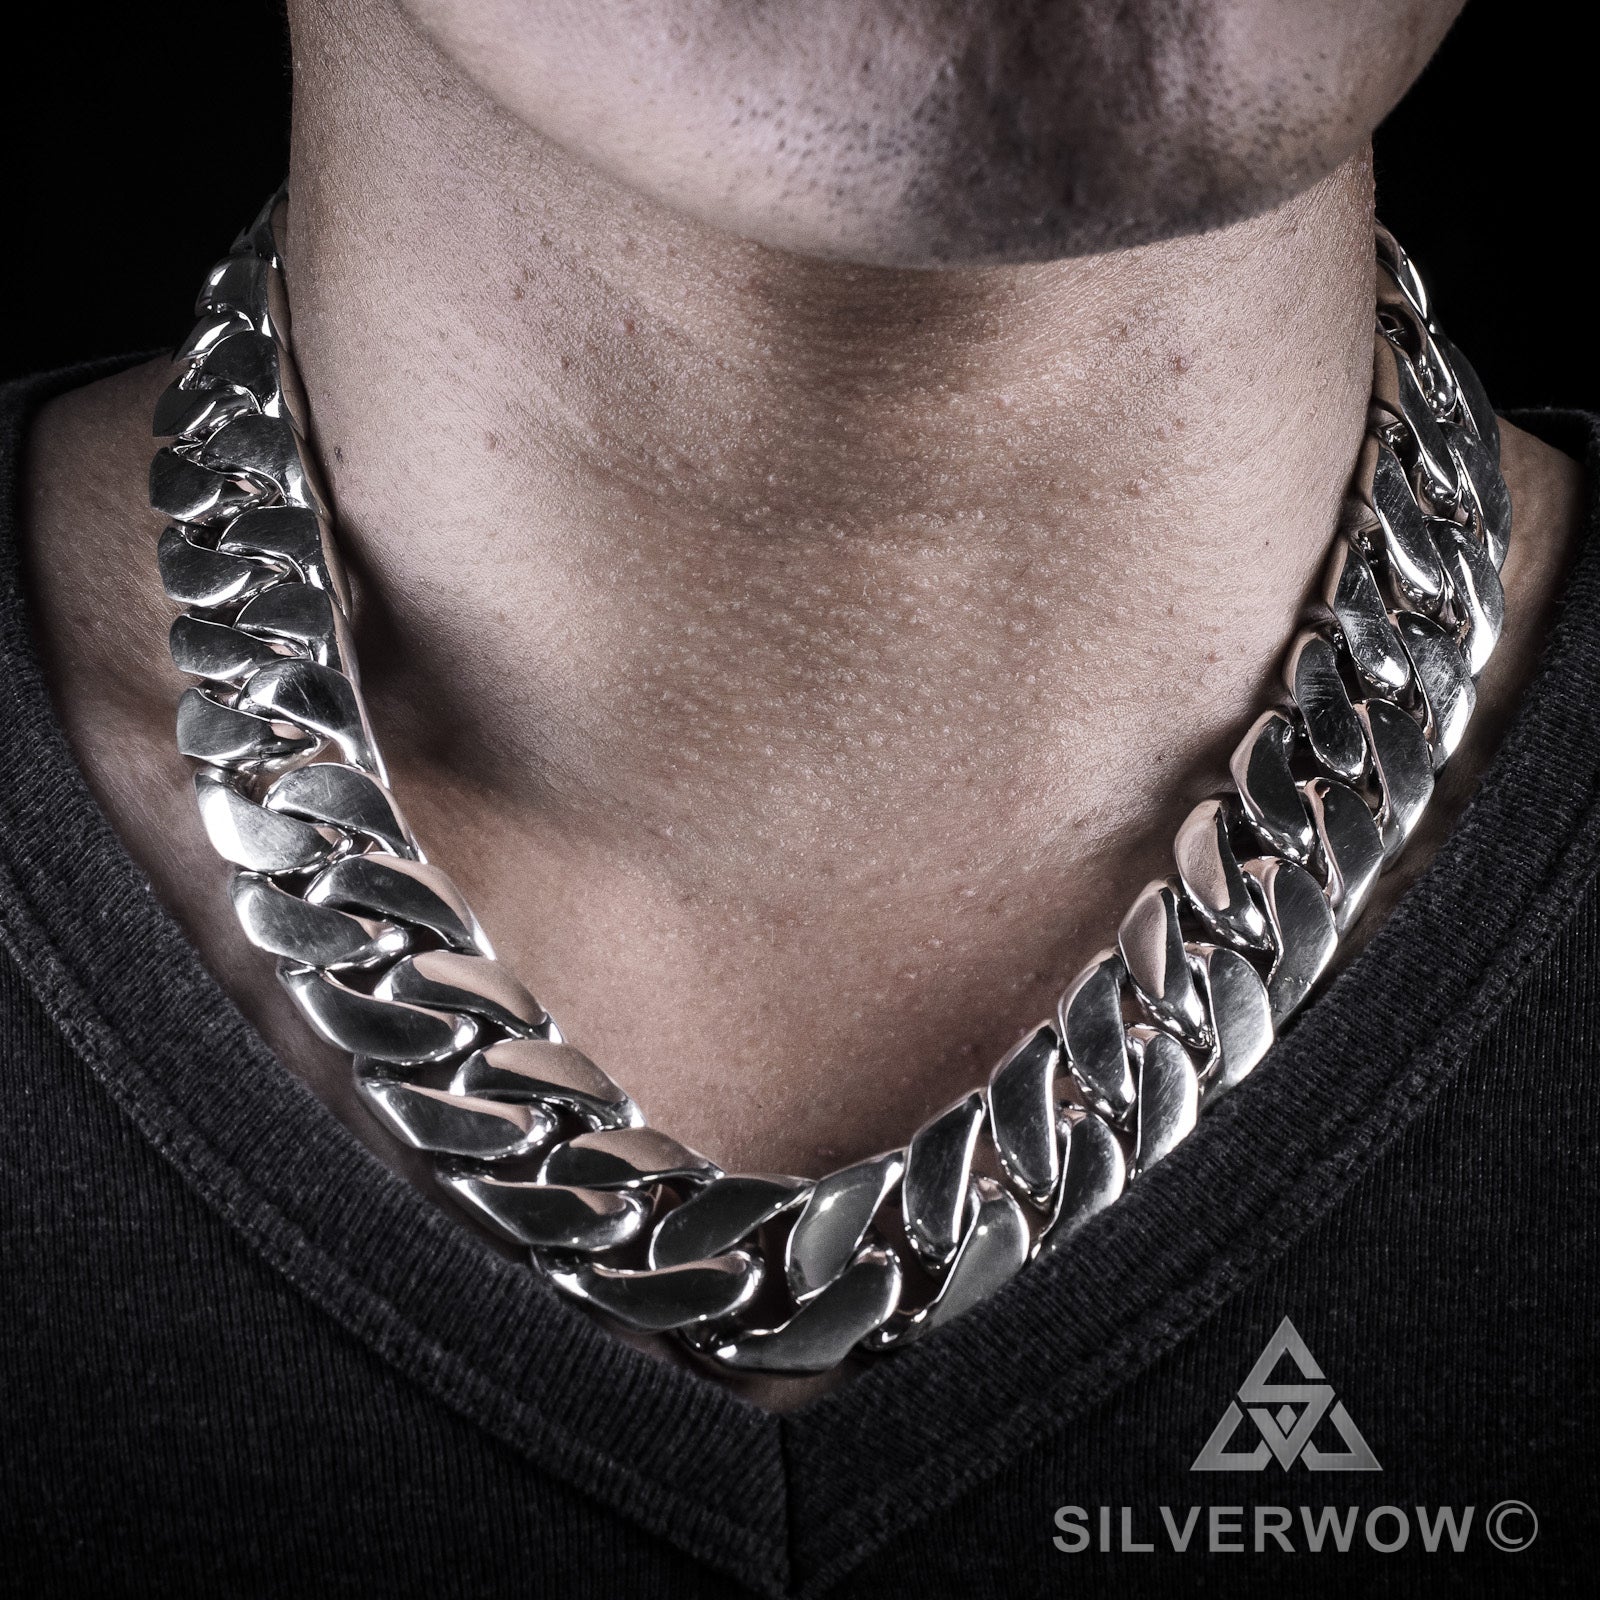 Casual Wear Men Silver Bracelet, 20 To 100 Gm at Rs 1200/piece in Rajkot |  ID: 2850461336891